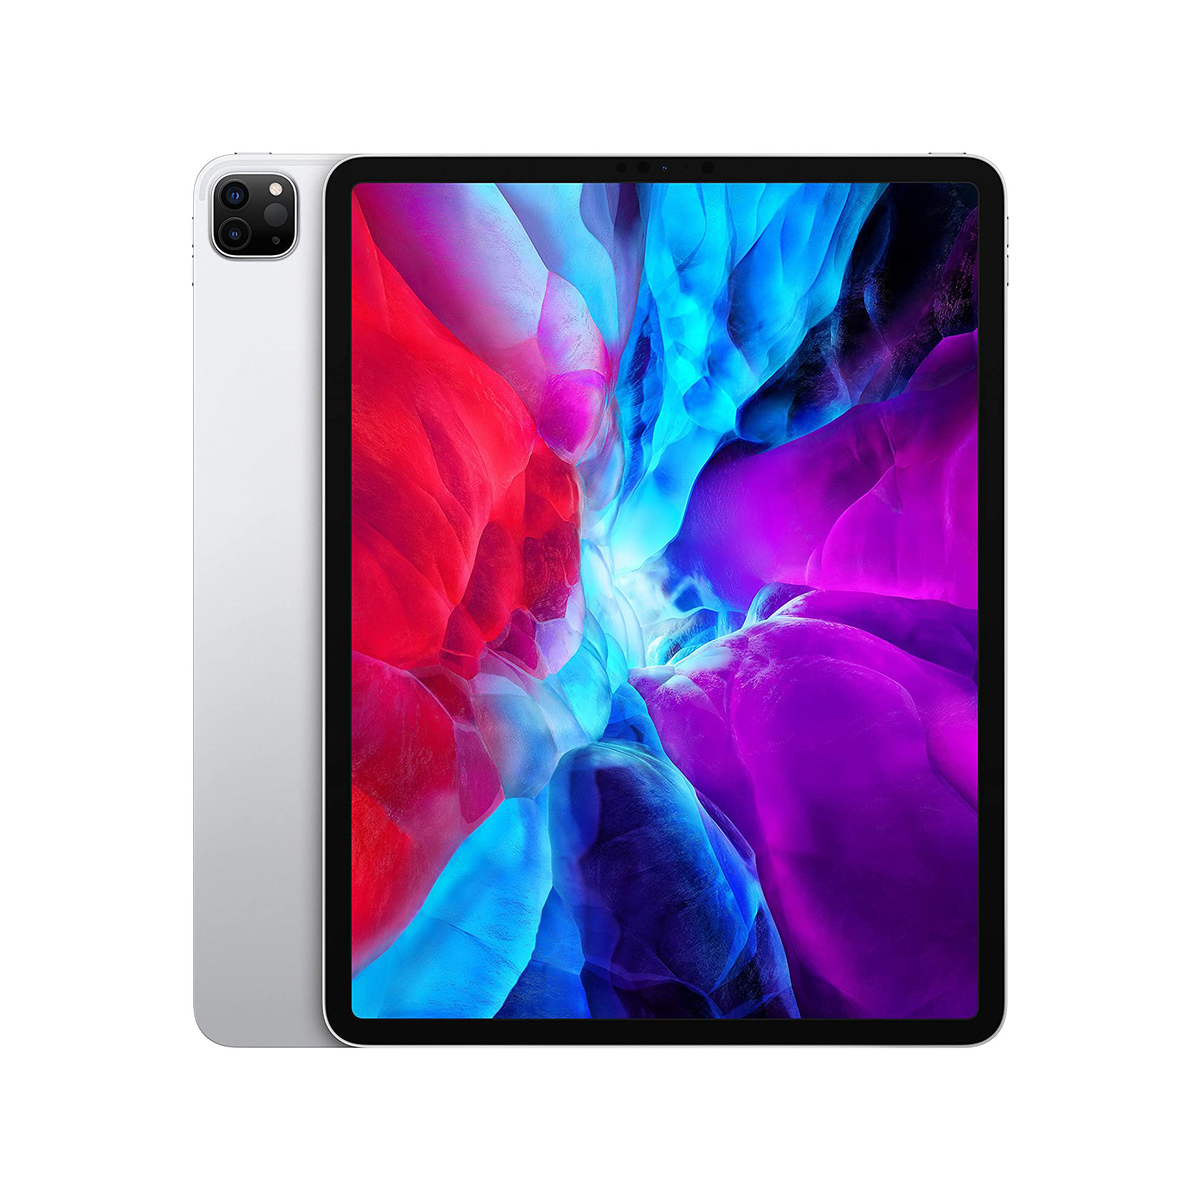 Apple iPad Pro (12.9-inch, Wi-Fi, 1TB) - Silver (4th Generation)